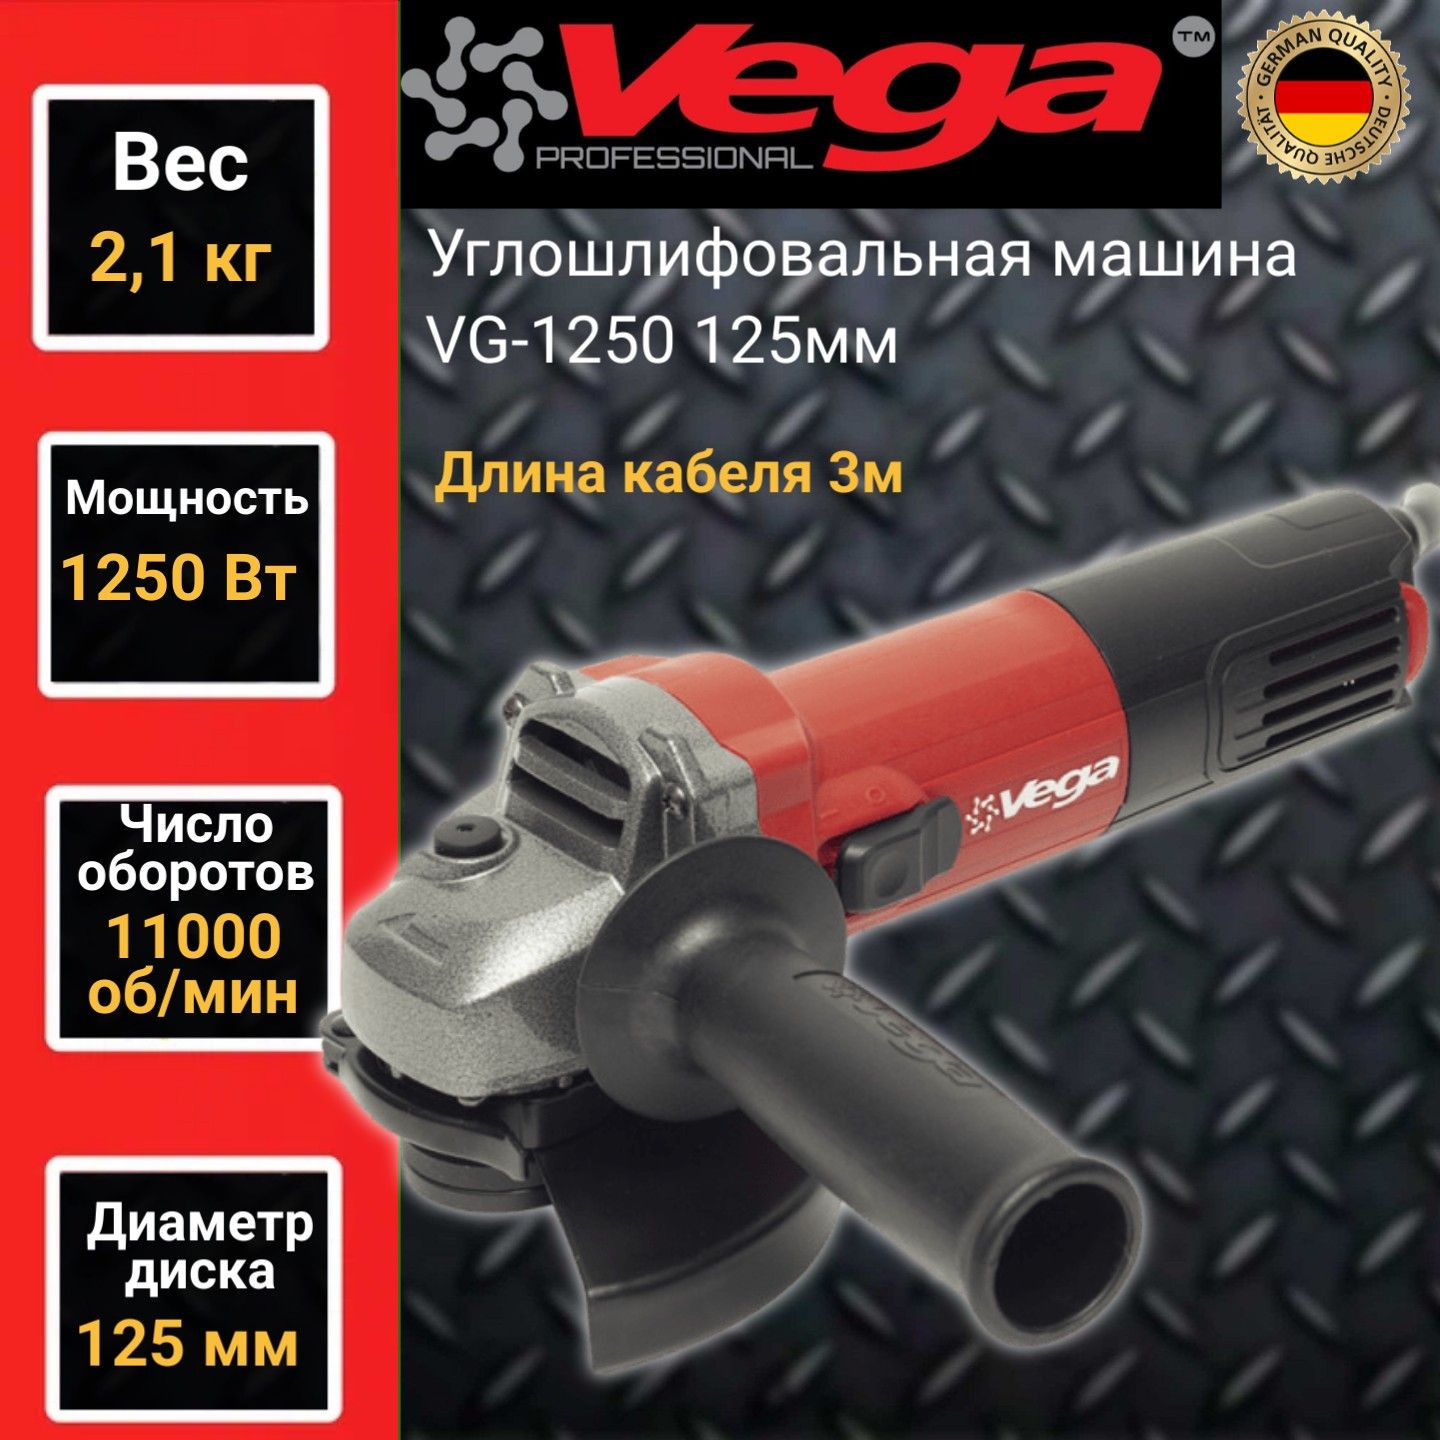 Углошлифовальная машина болгарка Vega Professional VG 1250, 125мм круг,1250Вт,11000об/мин шлифмашина угловая пульсар ушм 125 1200эс 792 476 1200вт 125 мм 3000 11000об мин констант электр 2 5кг